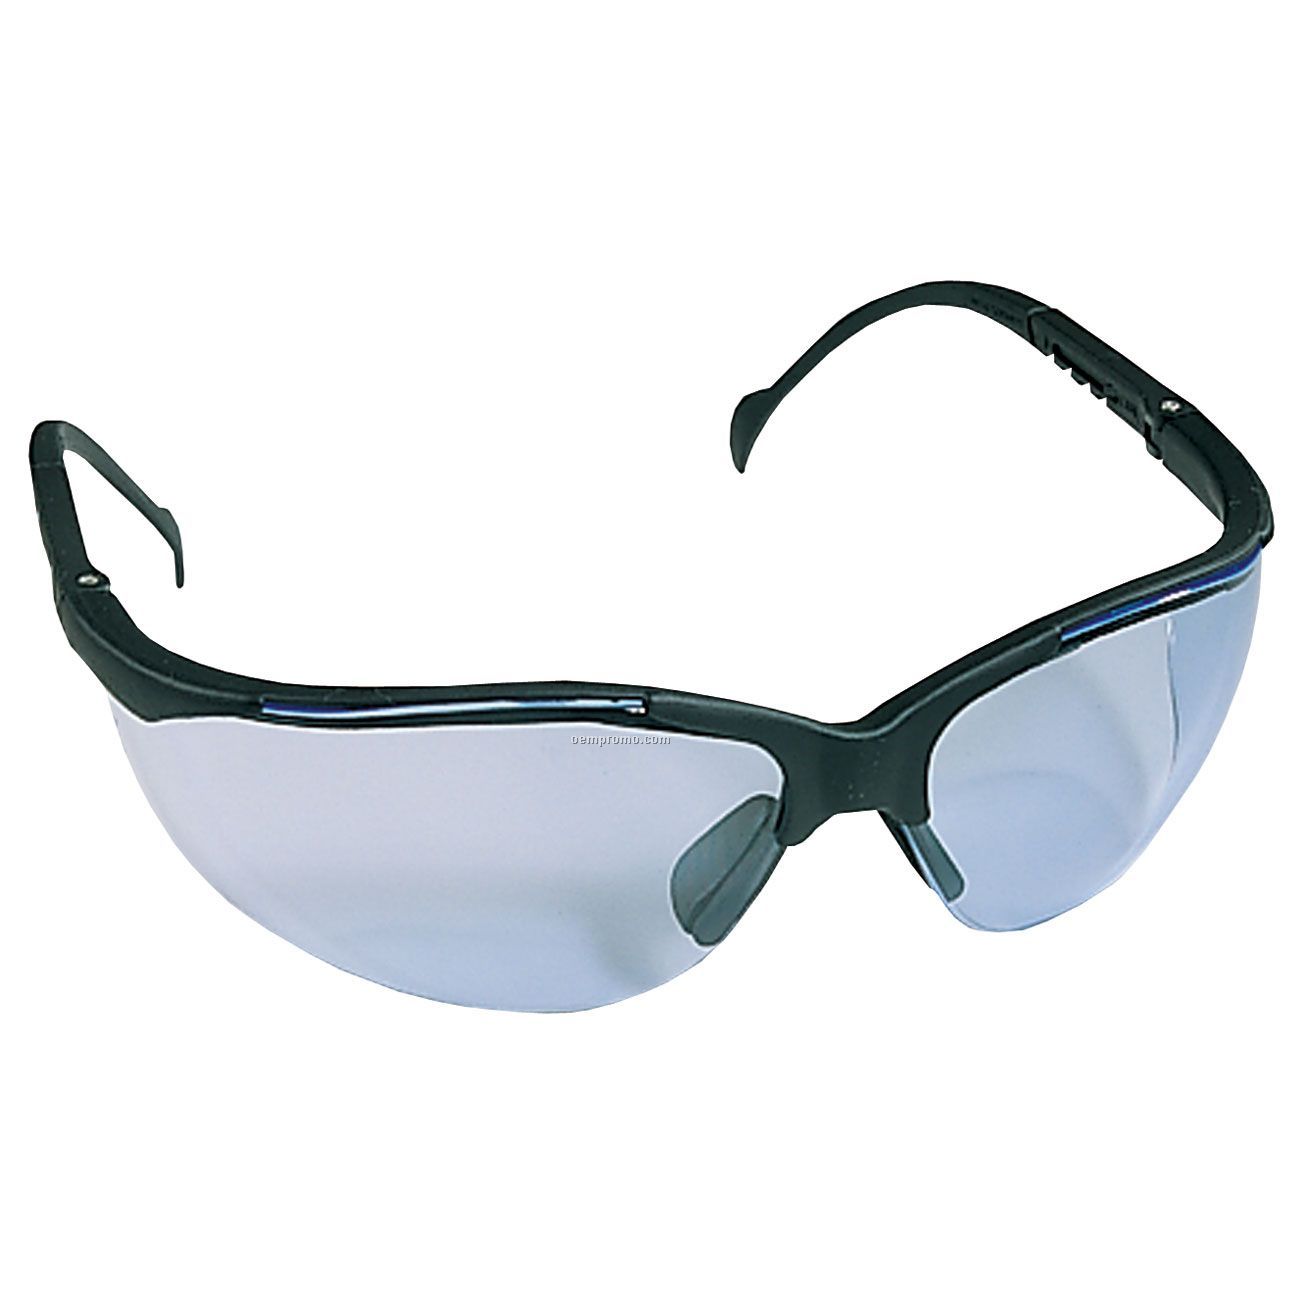 Pyramex Venture 77 Wrap Safety Glasses